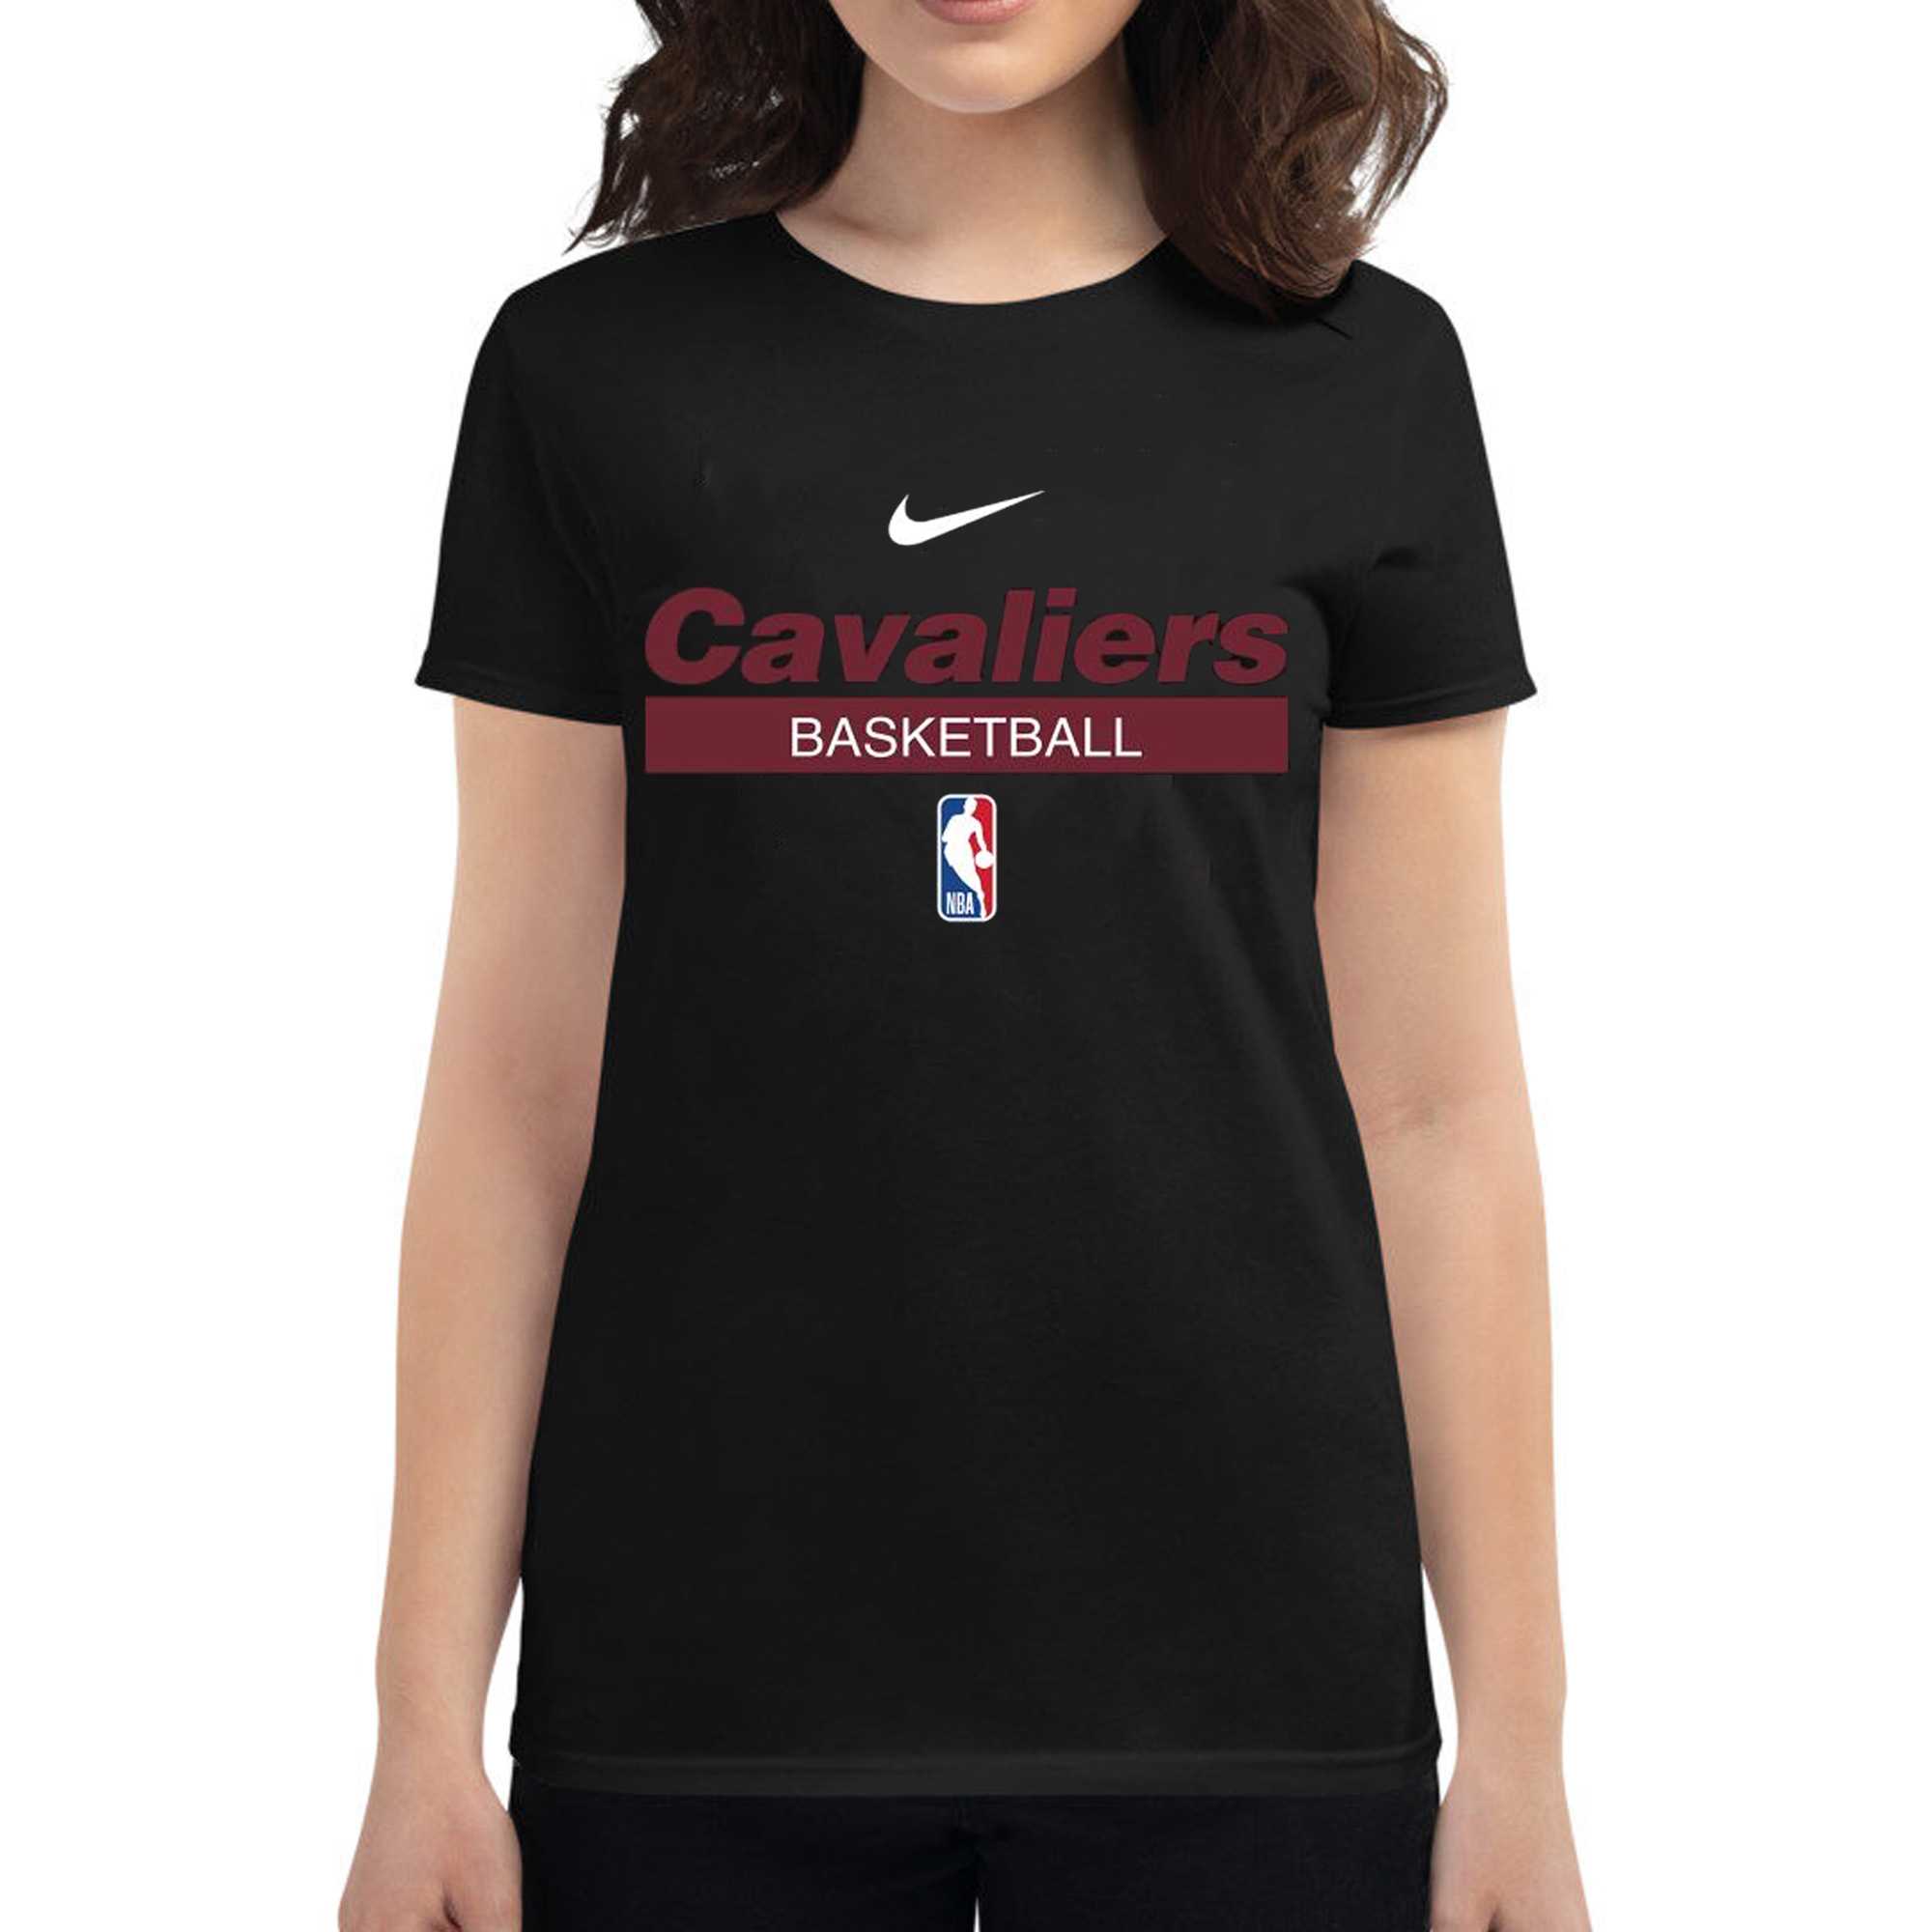 Cheap Cleveland Cavaliers Apparel, Discount Cavaliers Gear, NBA Cavaliers  Merchandise On Sale